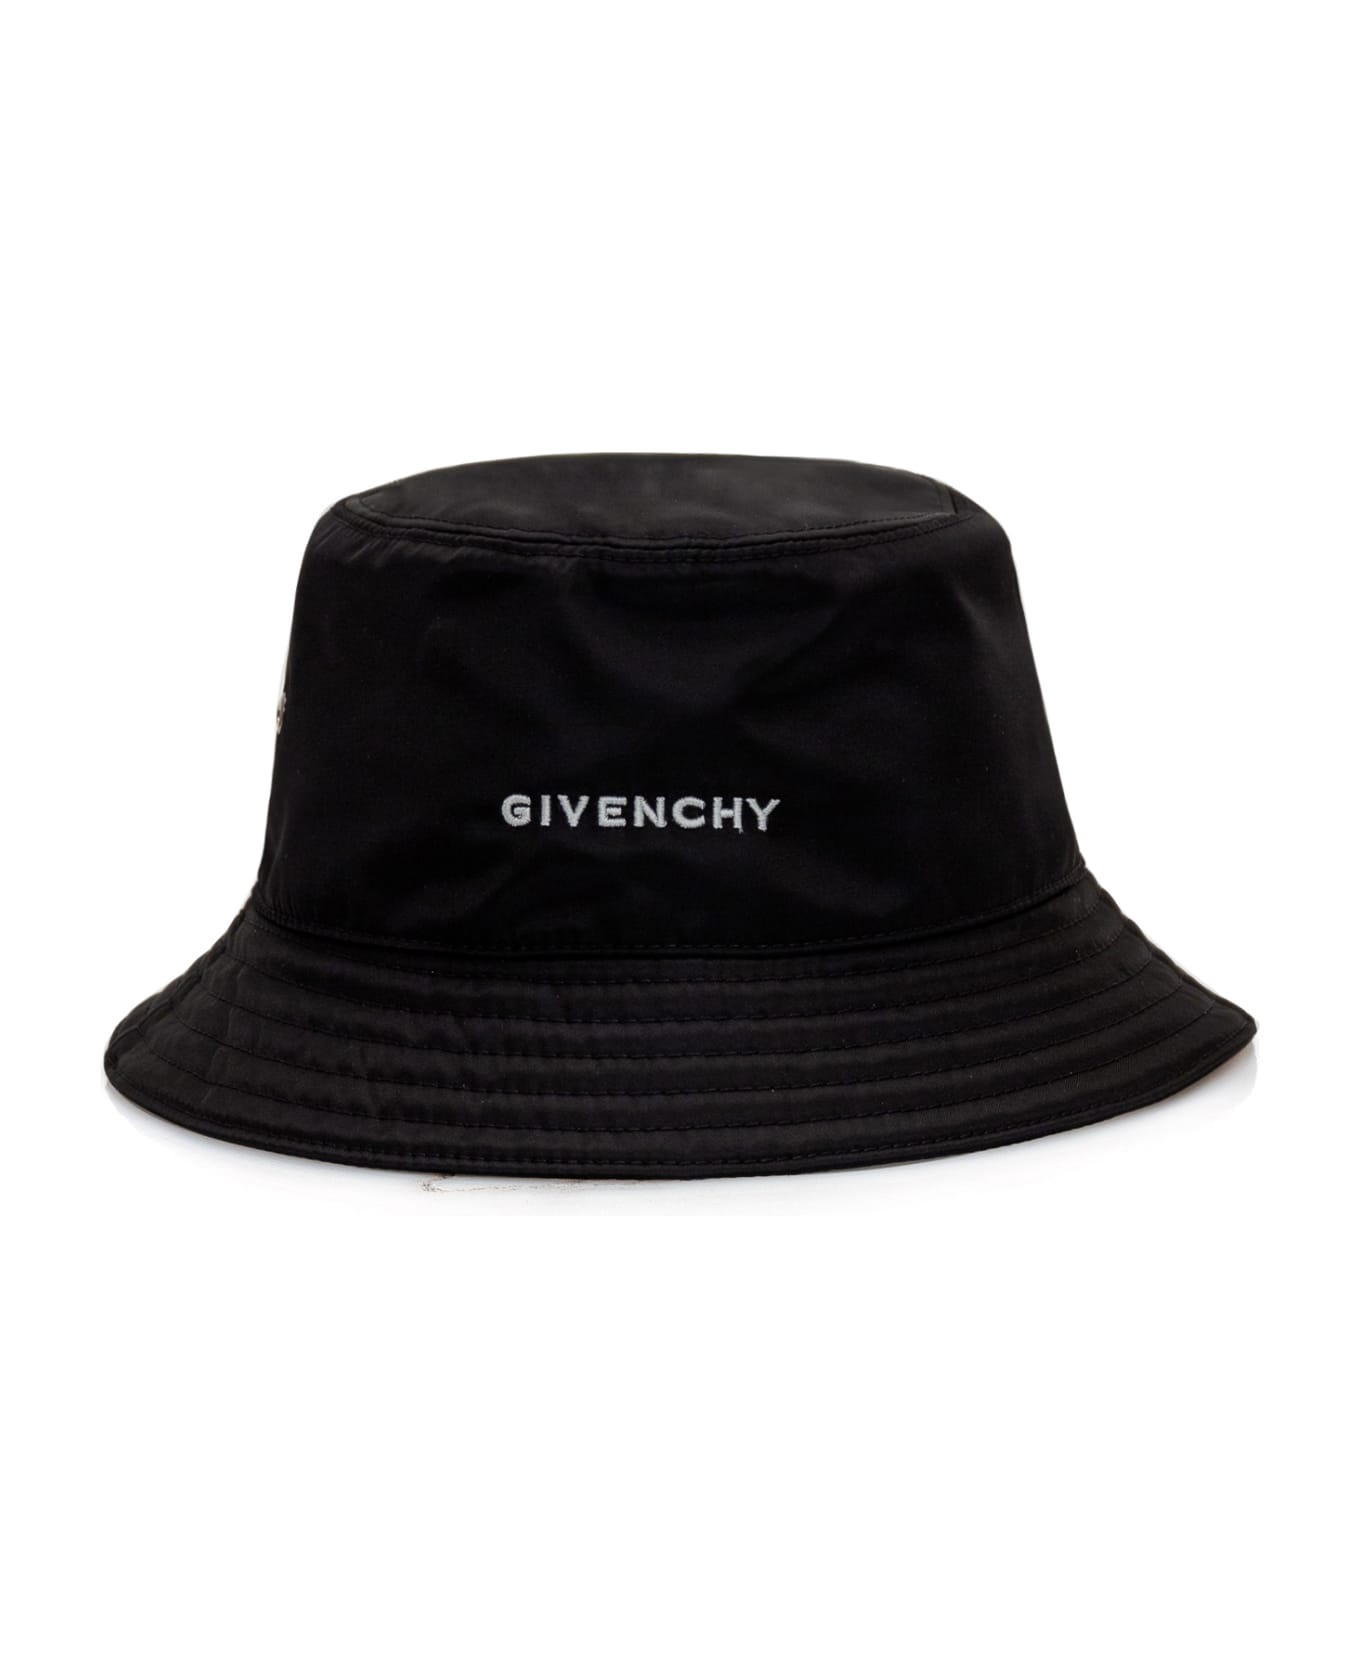 Givenchy Logo Bucket Hat - BLACK